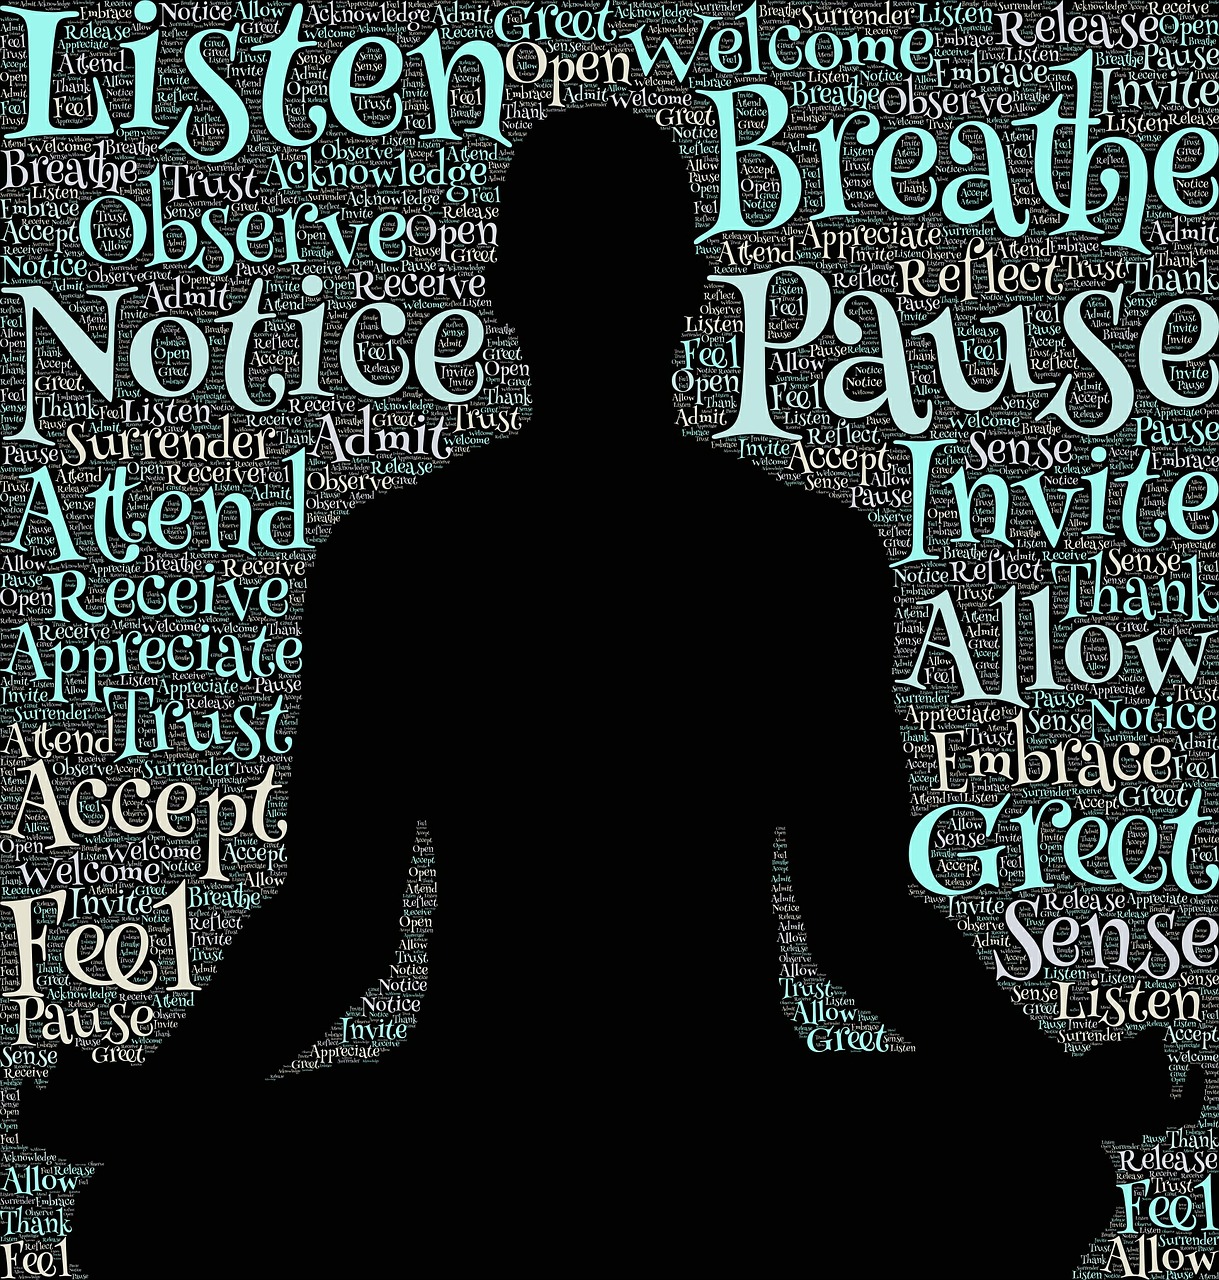 Cultivate a Positive Mind-Set Through Meditation